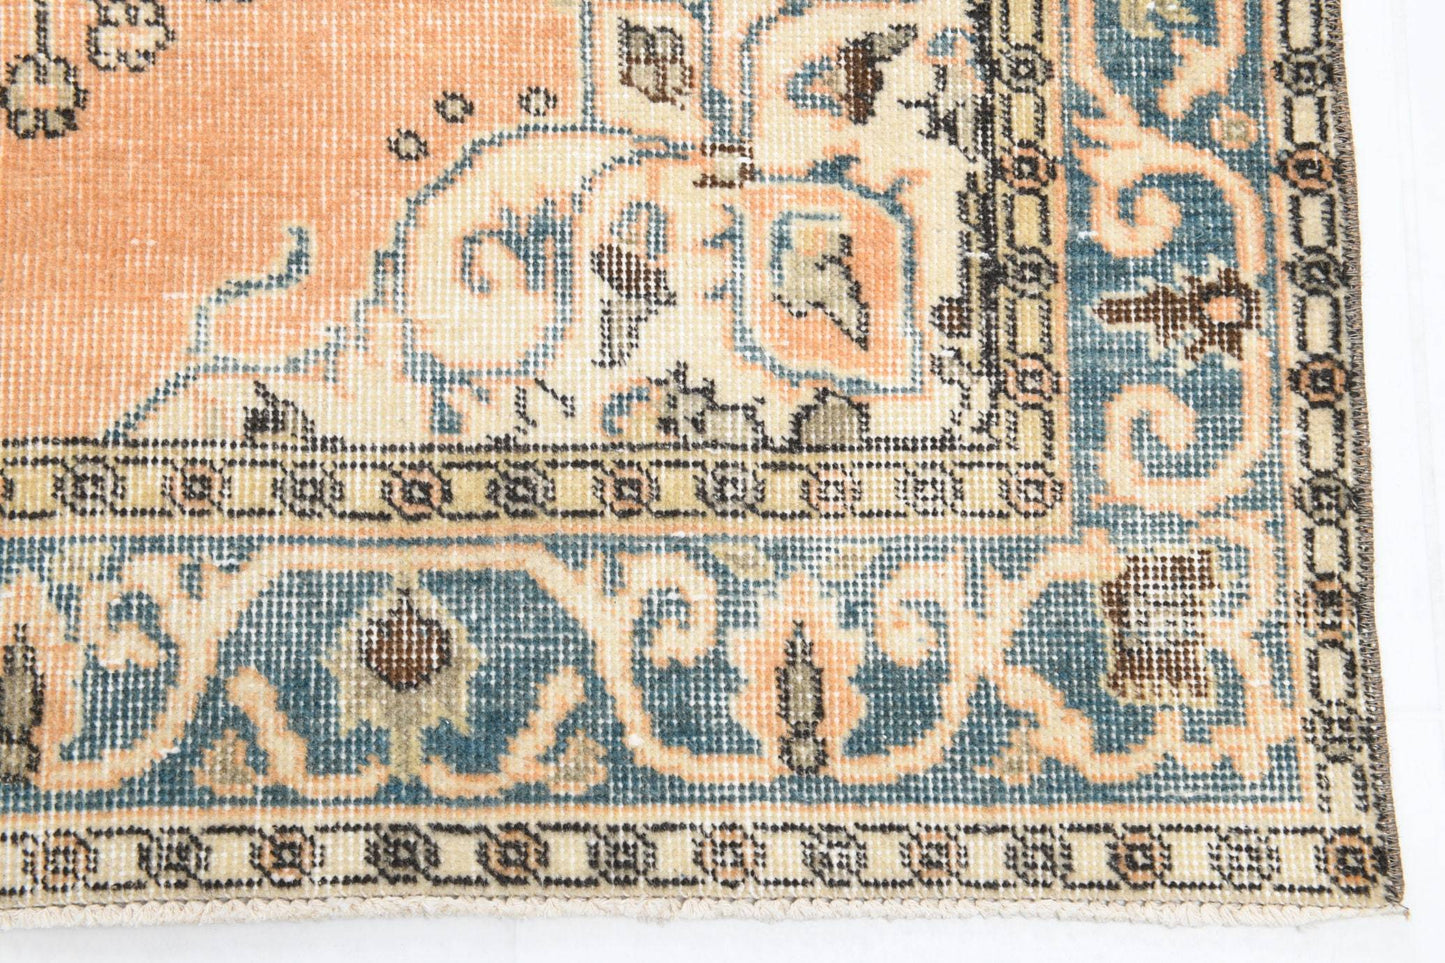 3' x 6' Tan-Ivory Turkish Vintage Rug  |  RugReform